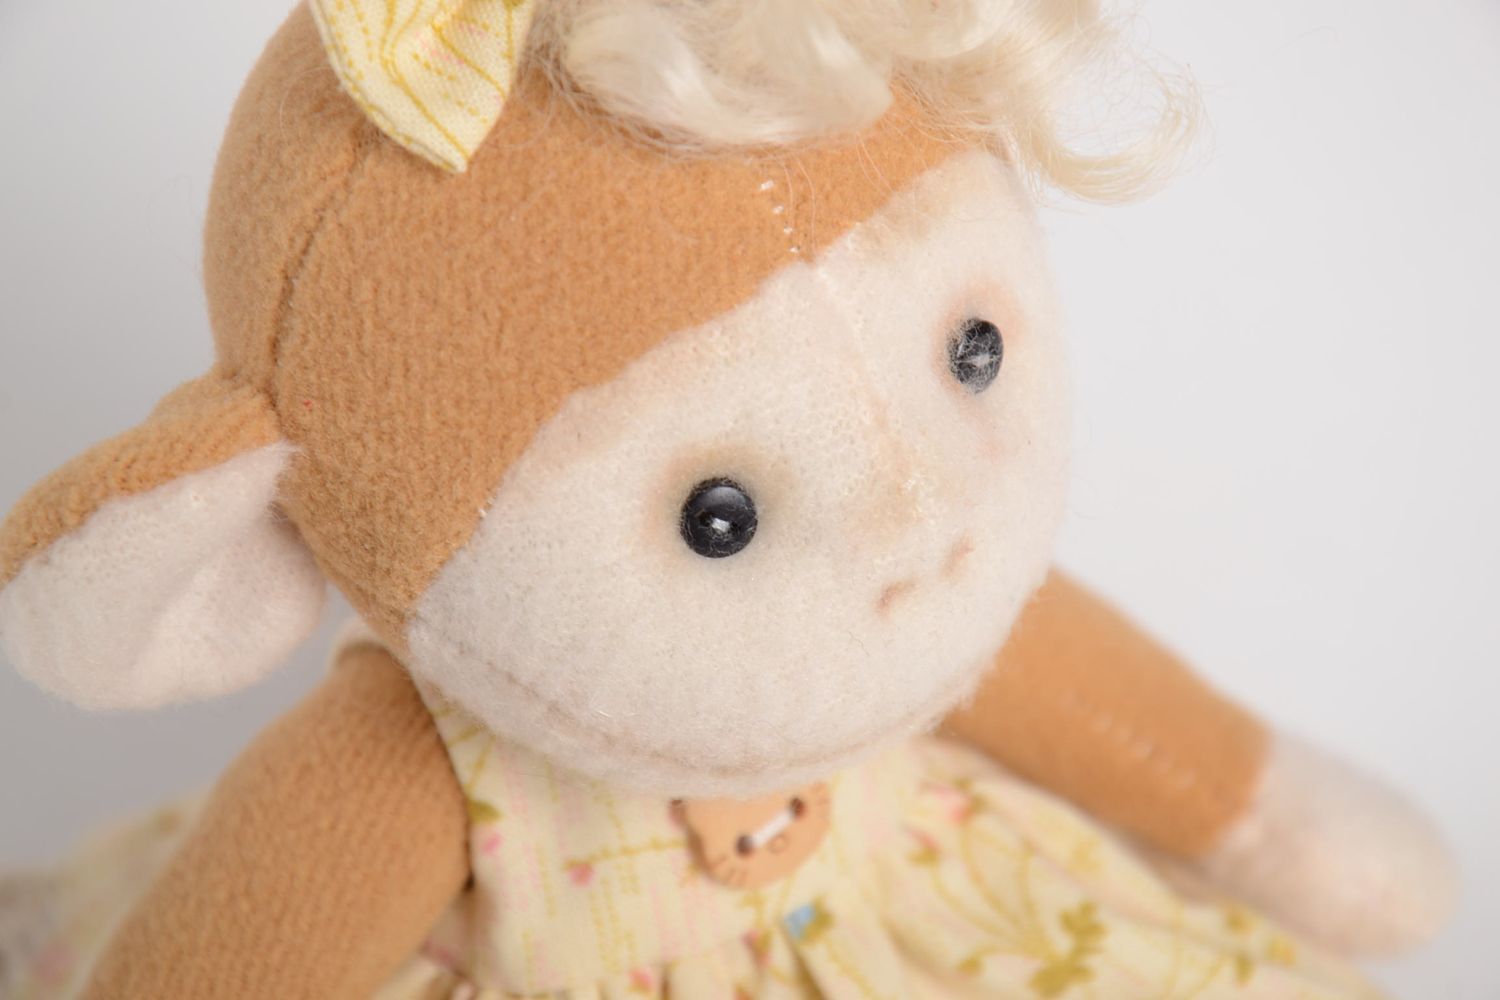 Handmade soft toy monkey stuffed toy for children interior decor ideas photo 4